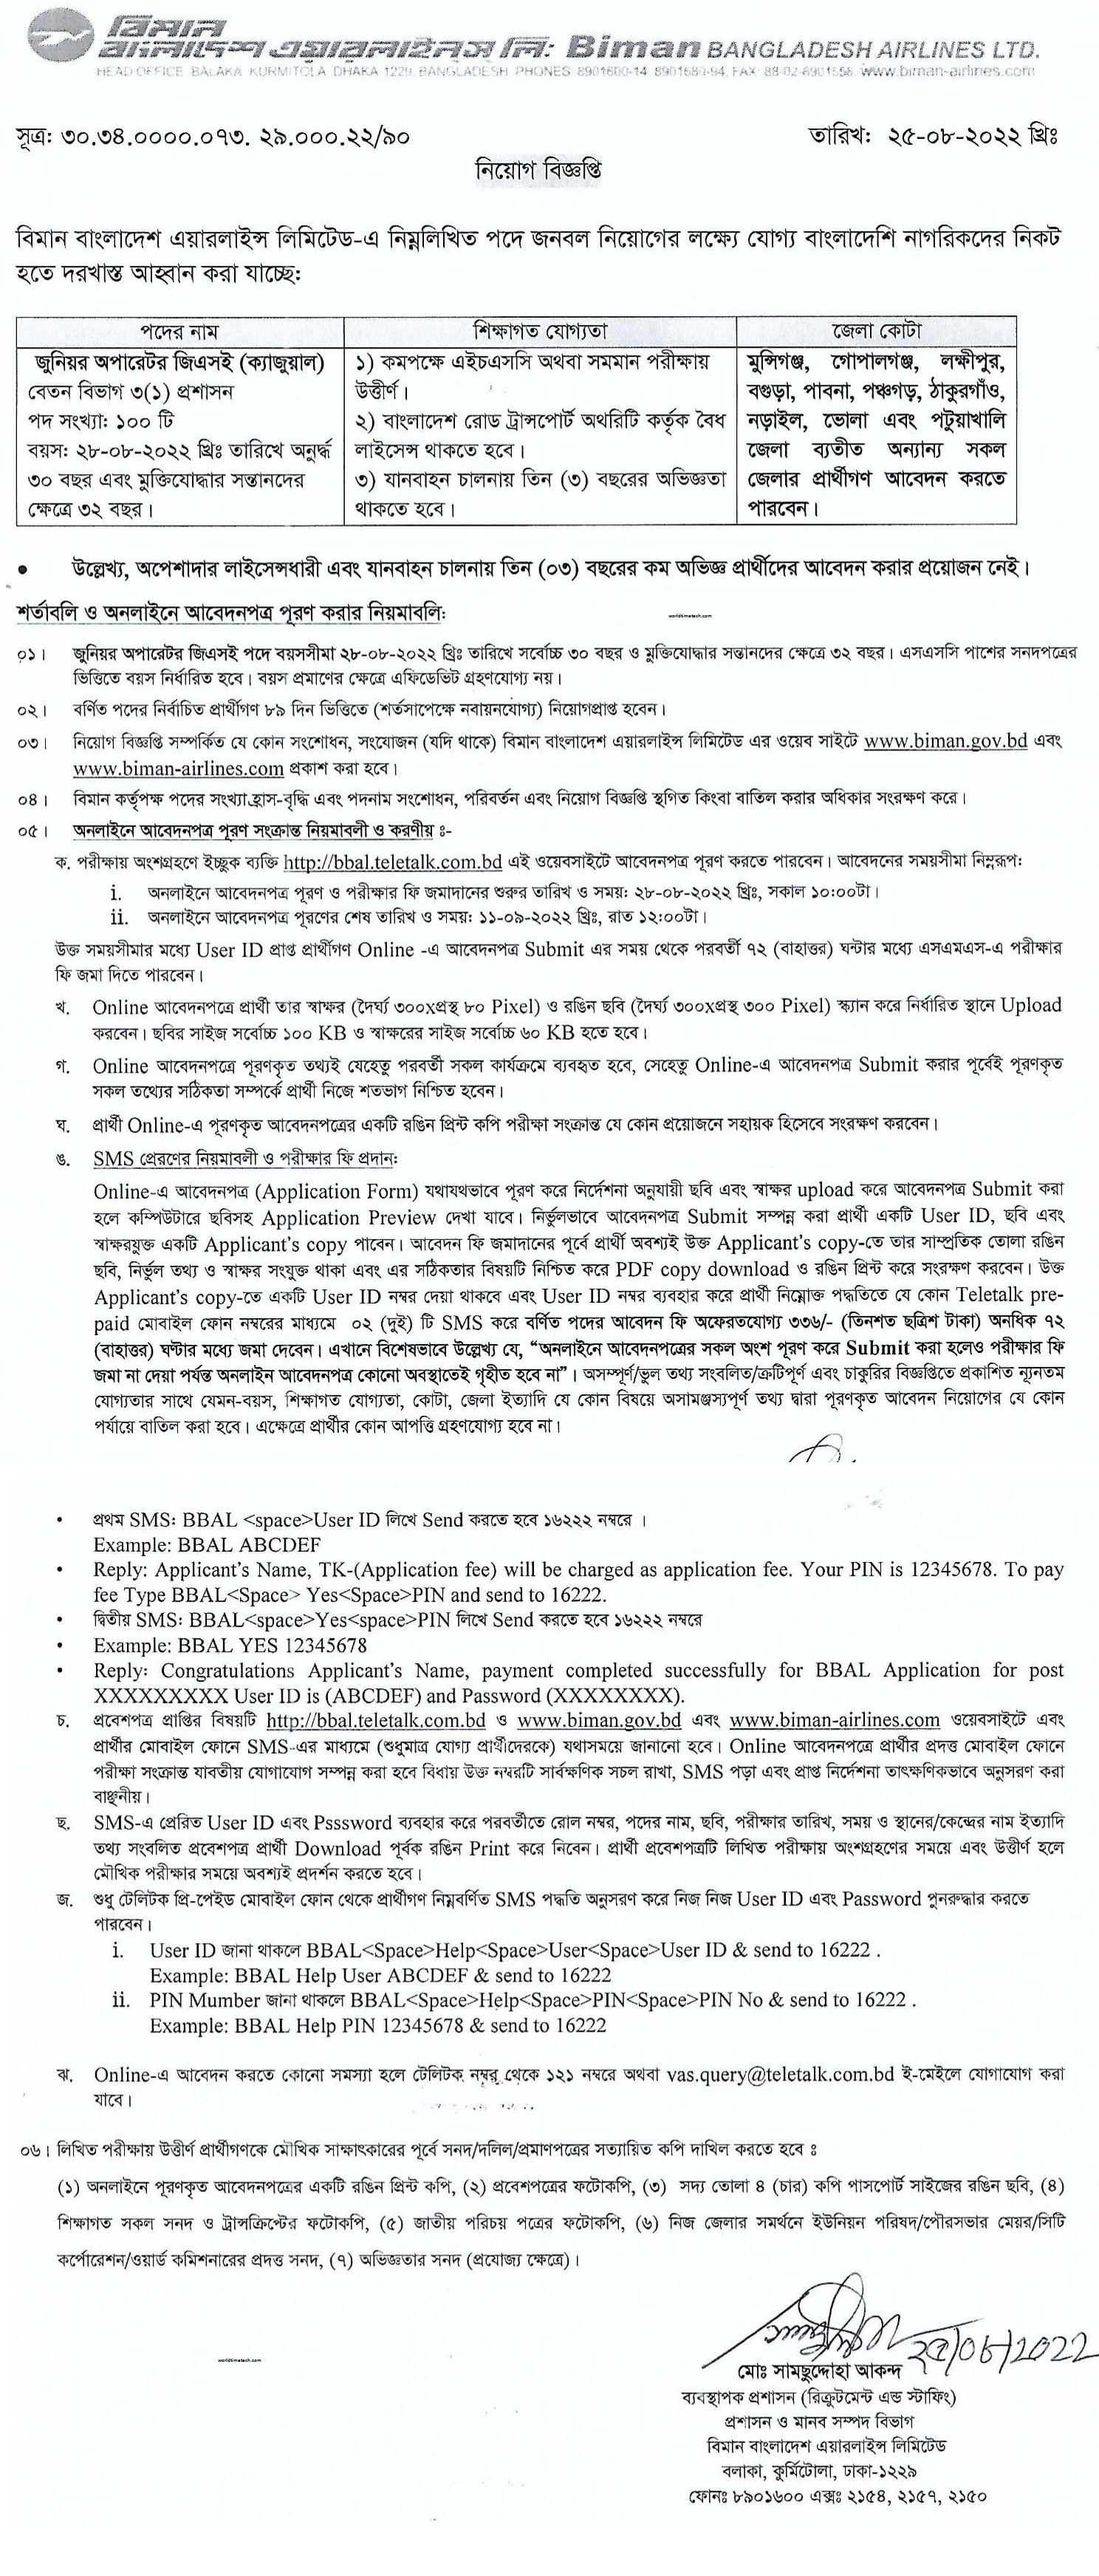 biman-bangladesh-airlines-ltd-job-circular-2022